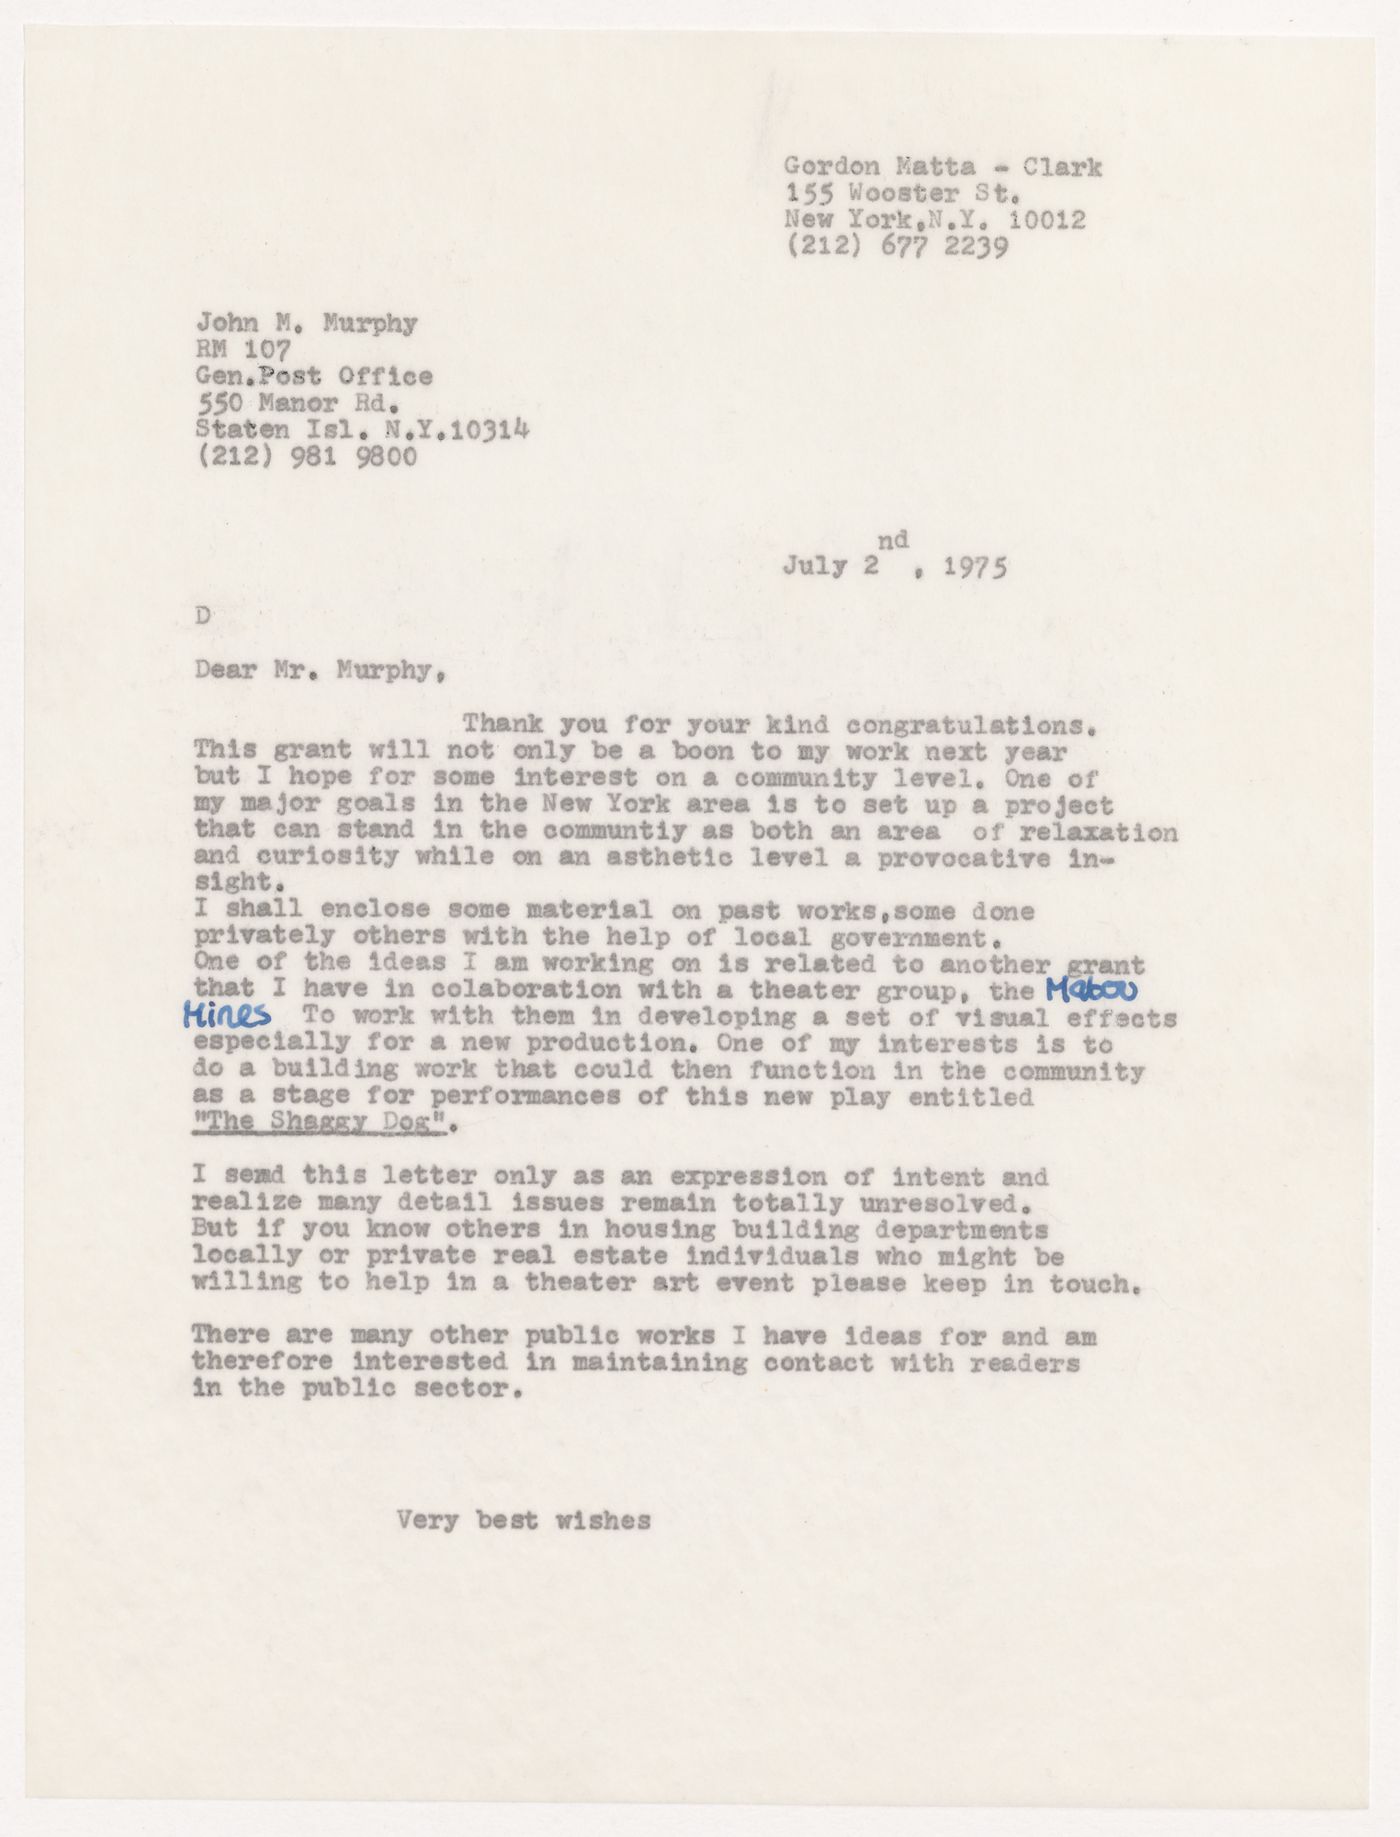 Letter from Gordon Matta-Clark to John M. Murphy